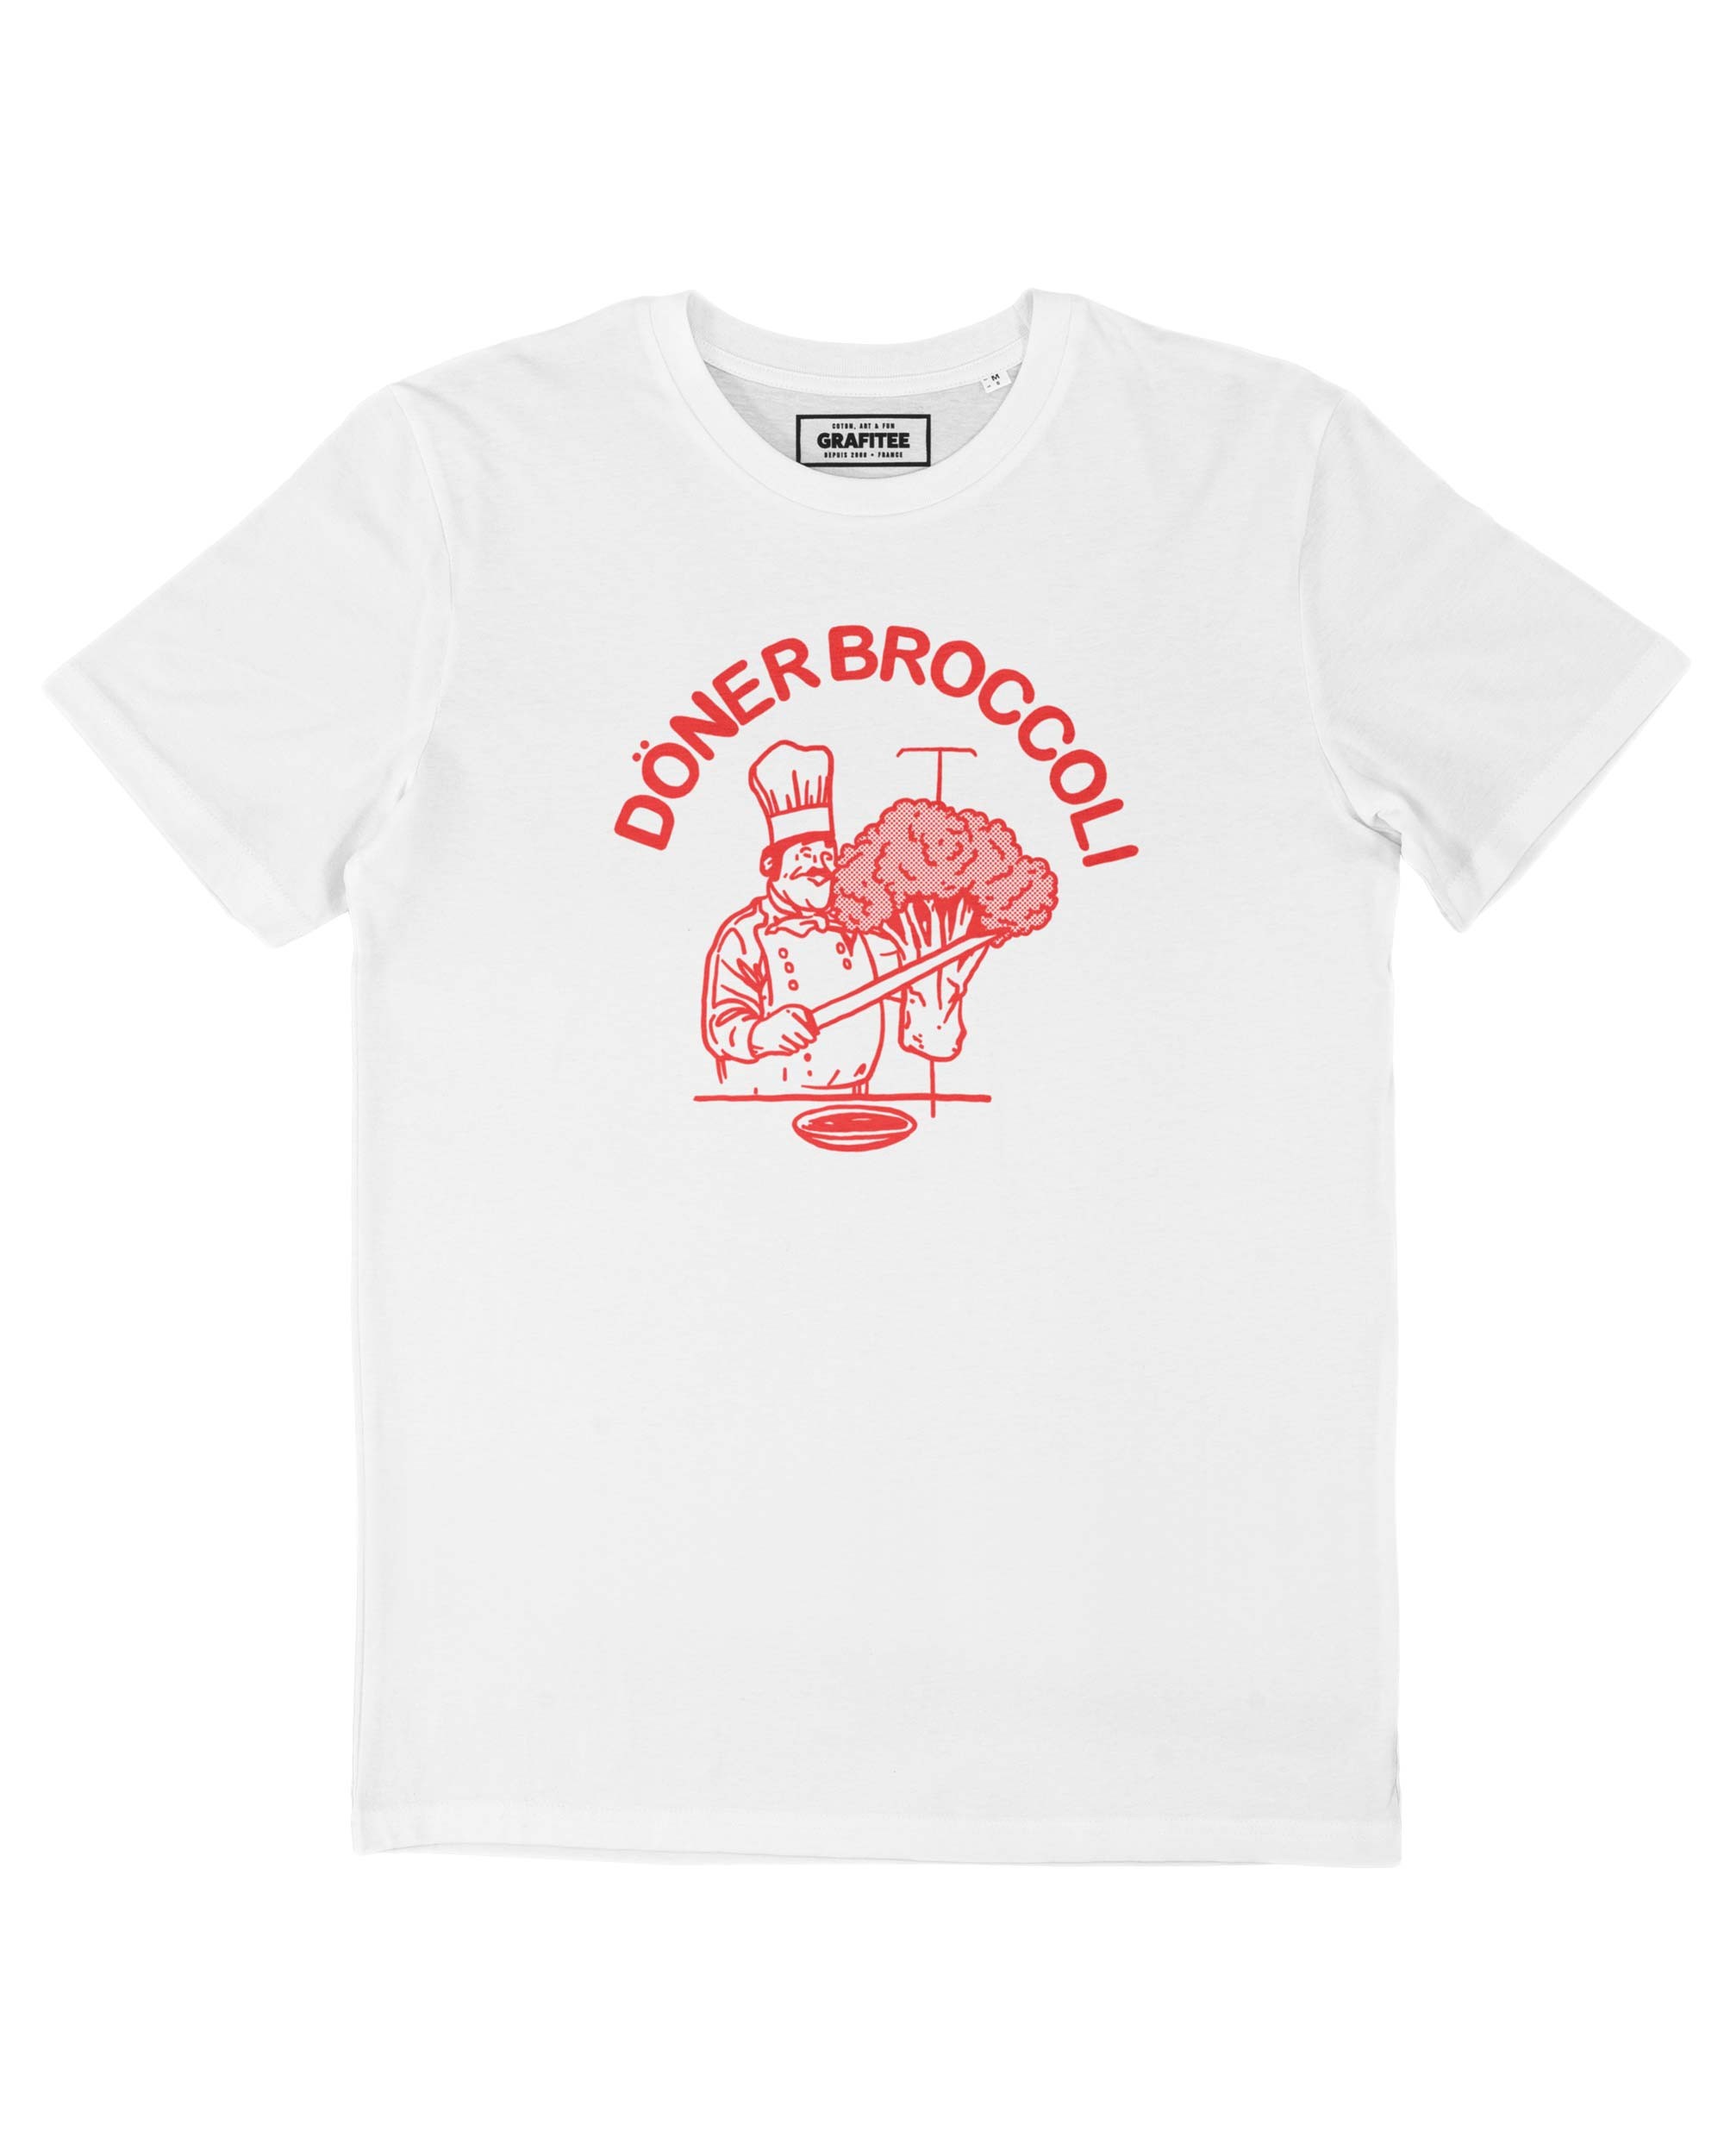 T-shirt Döner Broccoli Grafitee